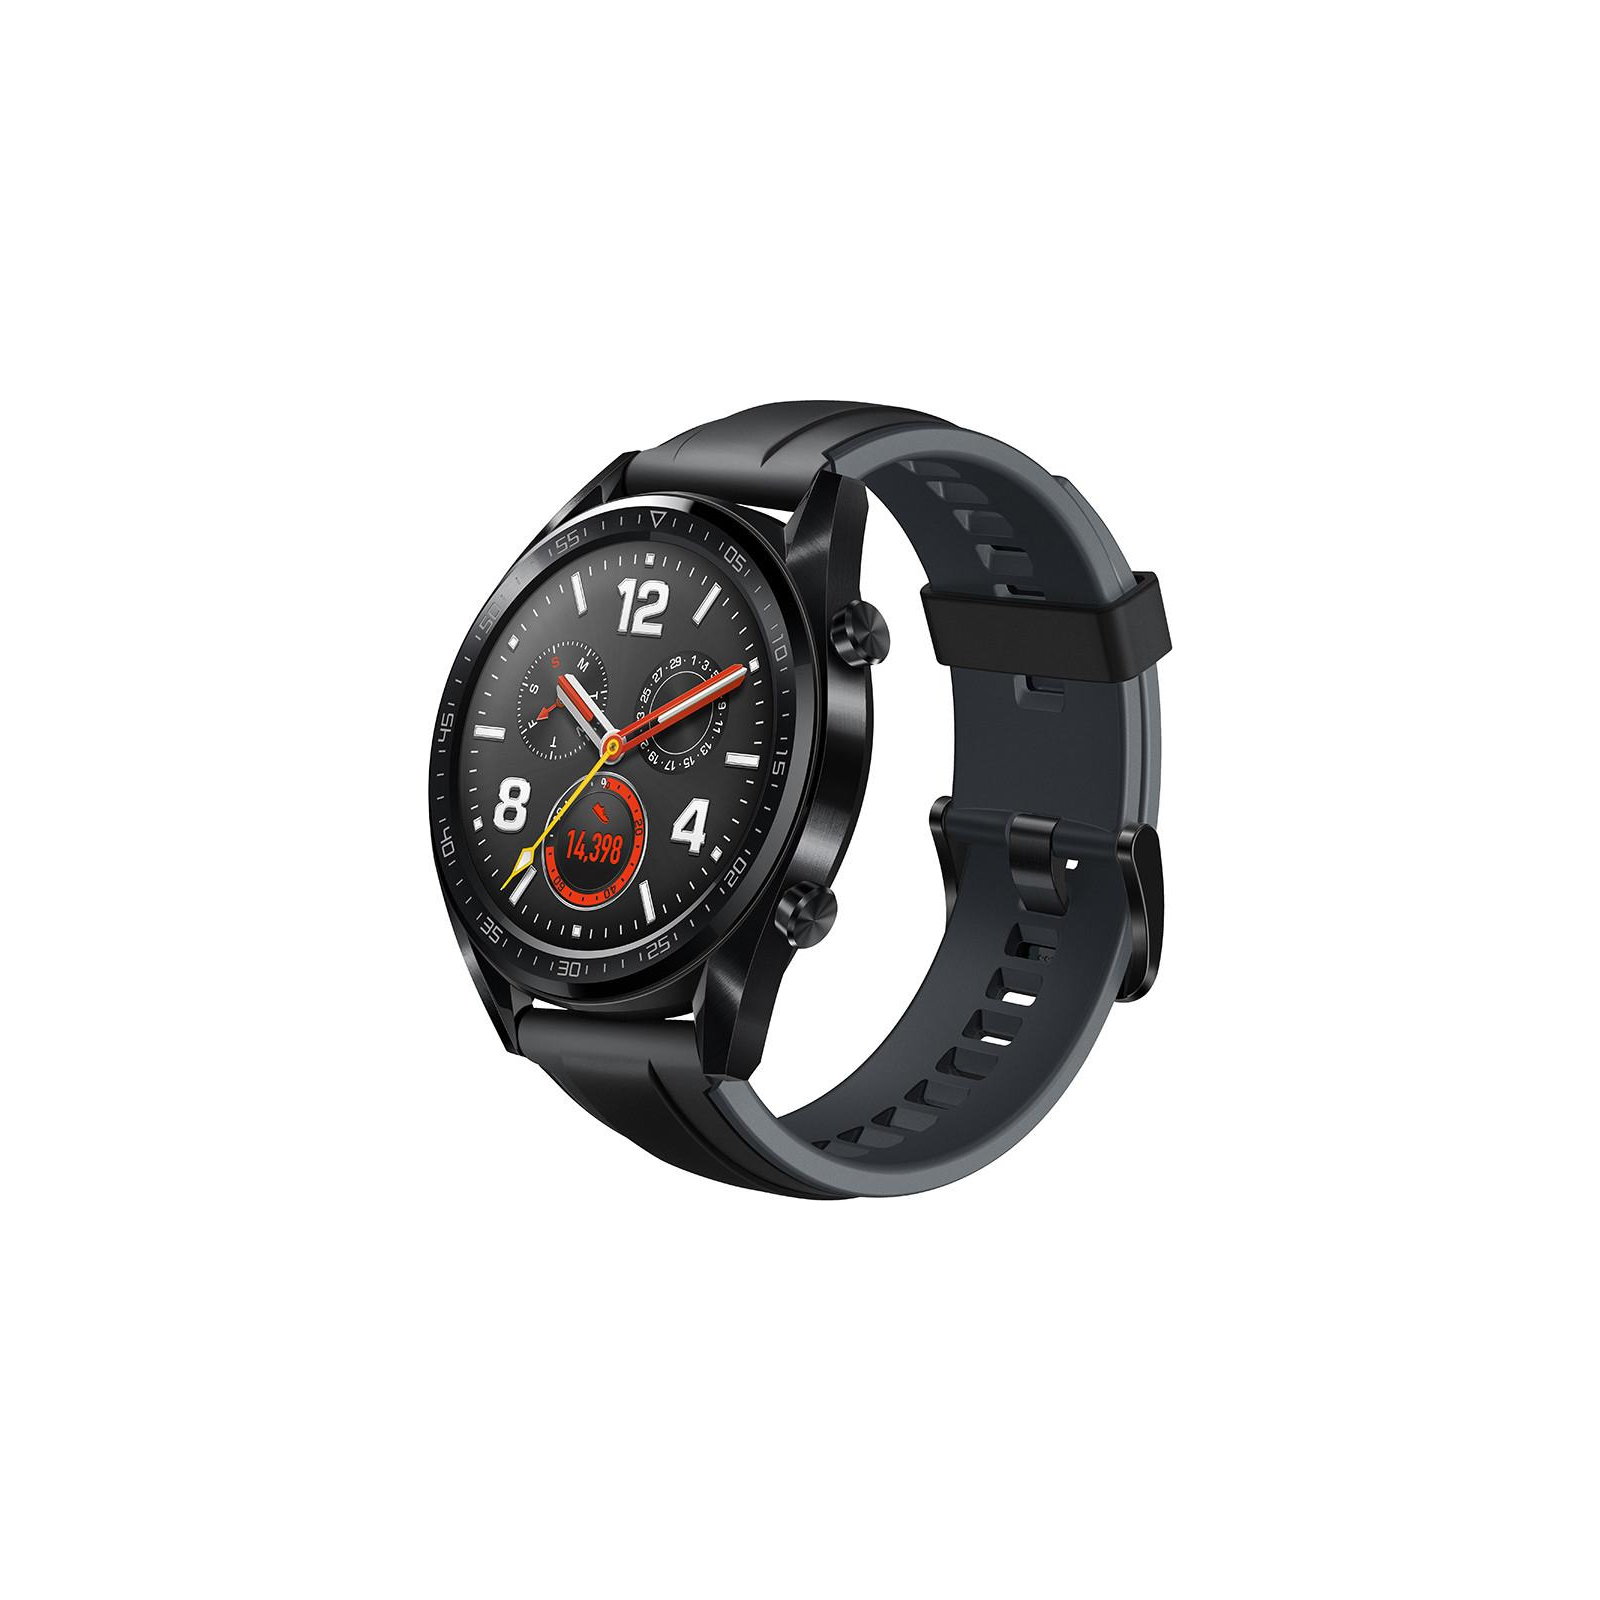 Смарт-часы Huawei GT Fortuna-B19 (Sport) Black (55023259)